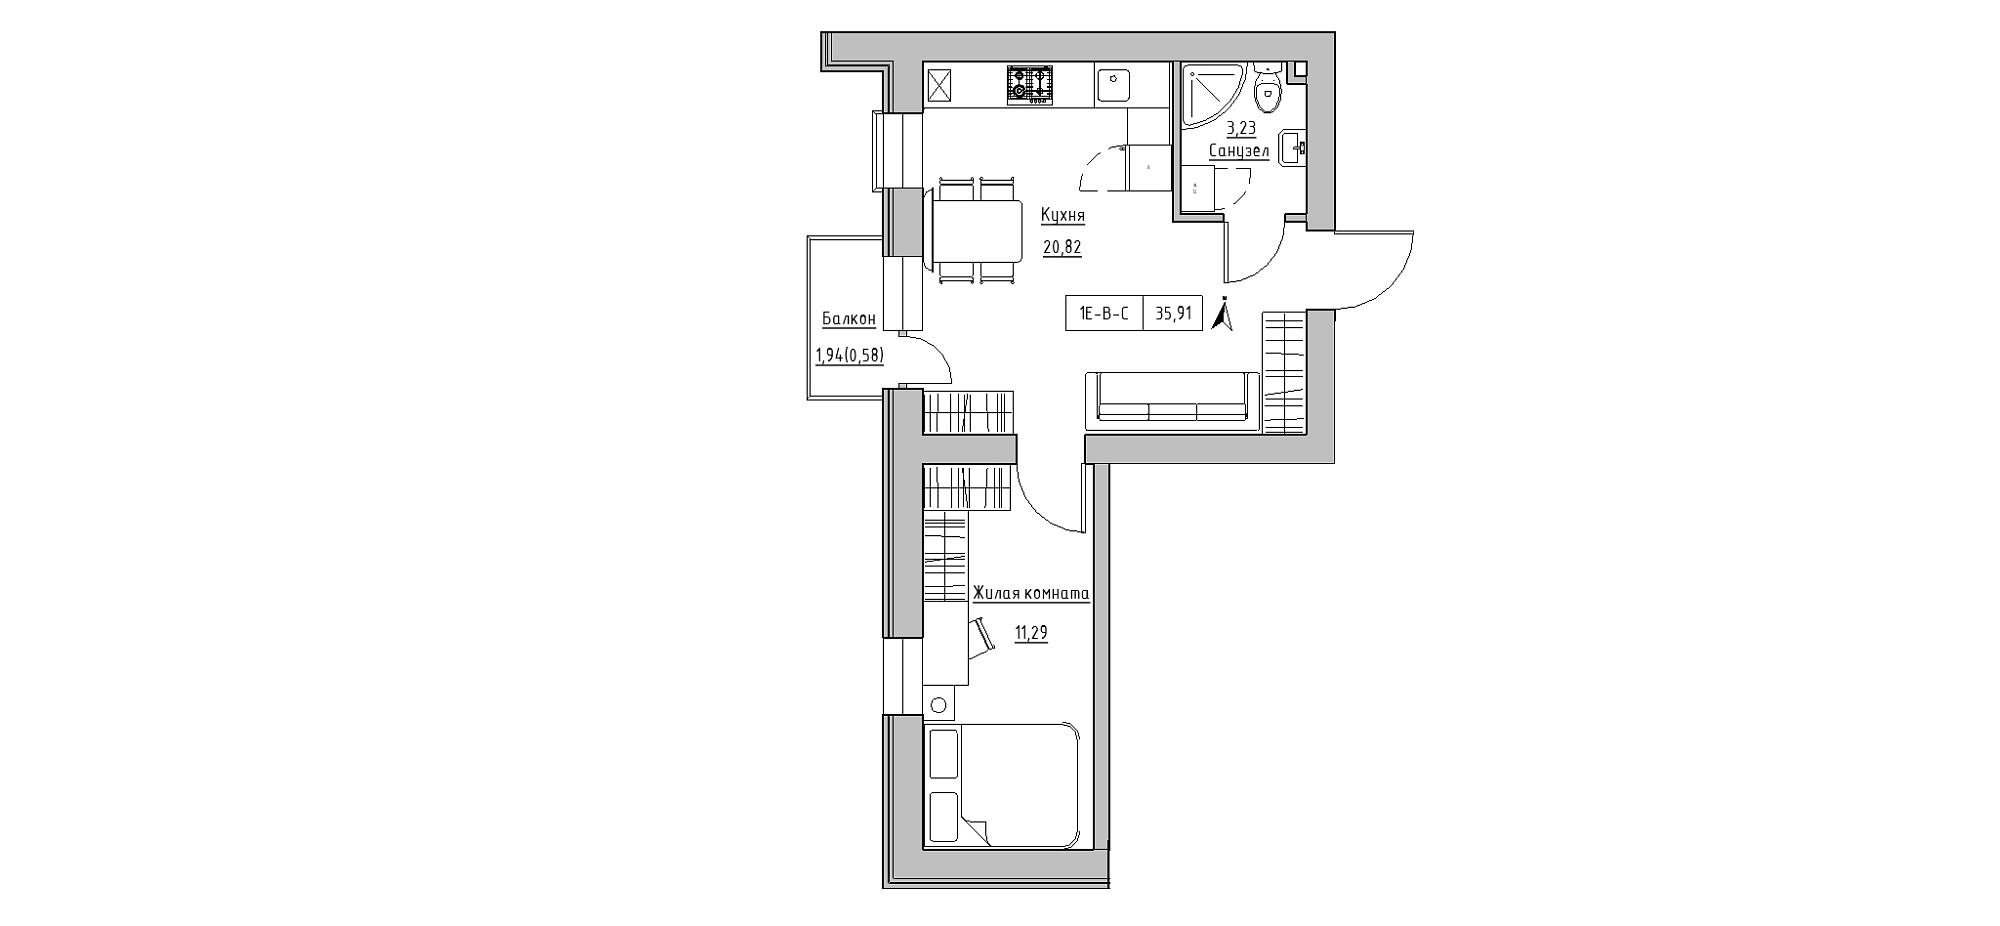 Planning 1-rm flats area 35.91m2, KS-020-04/0009.